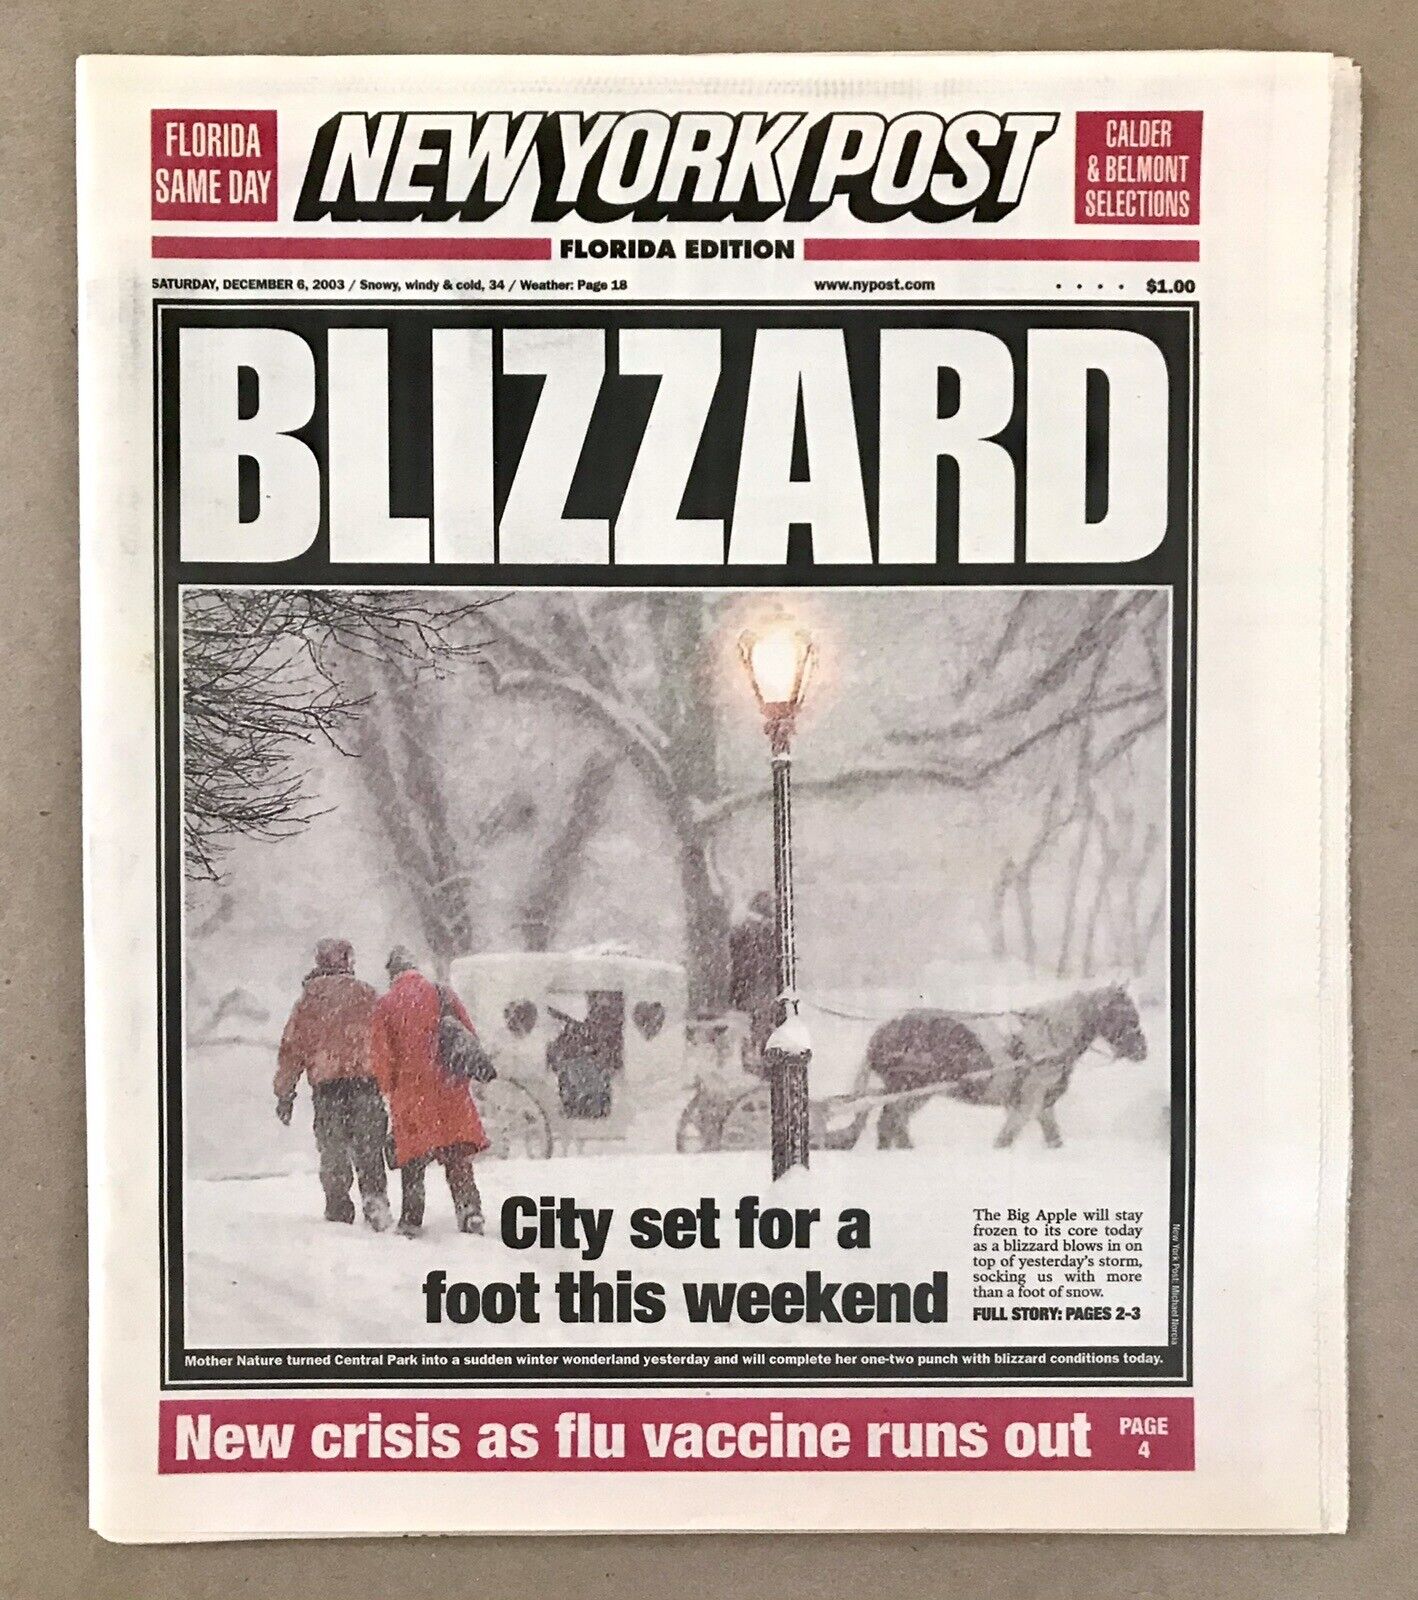 SCARCE: New York Post, Florida Edition (December 6, 2003) New York Blizzard, VG+